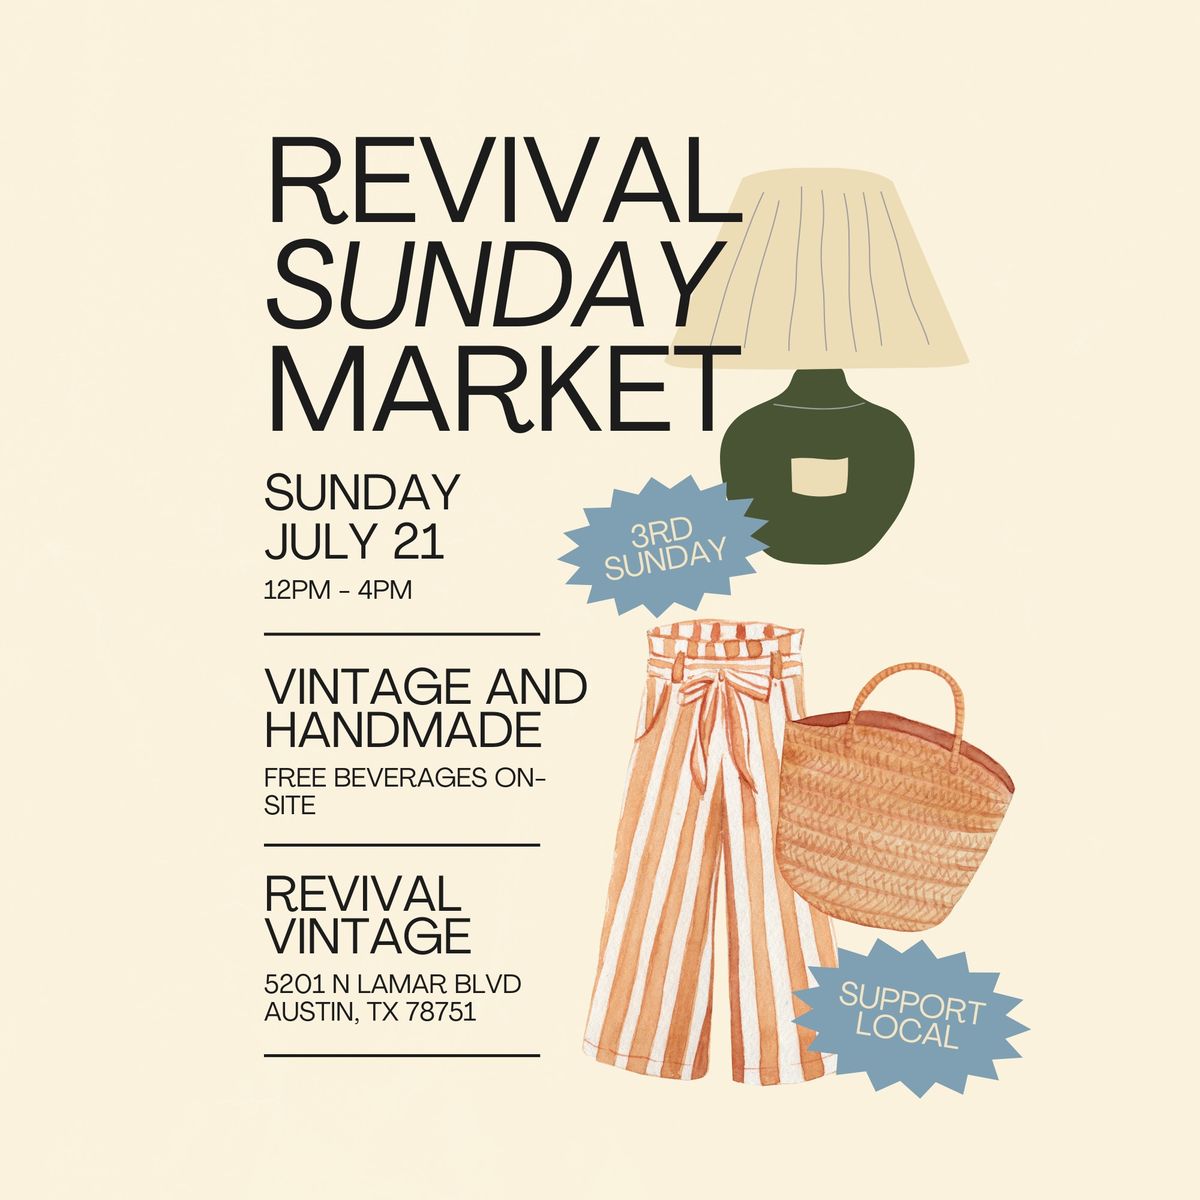 Revival Sunday Market